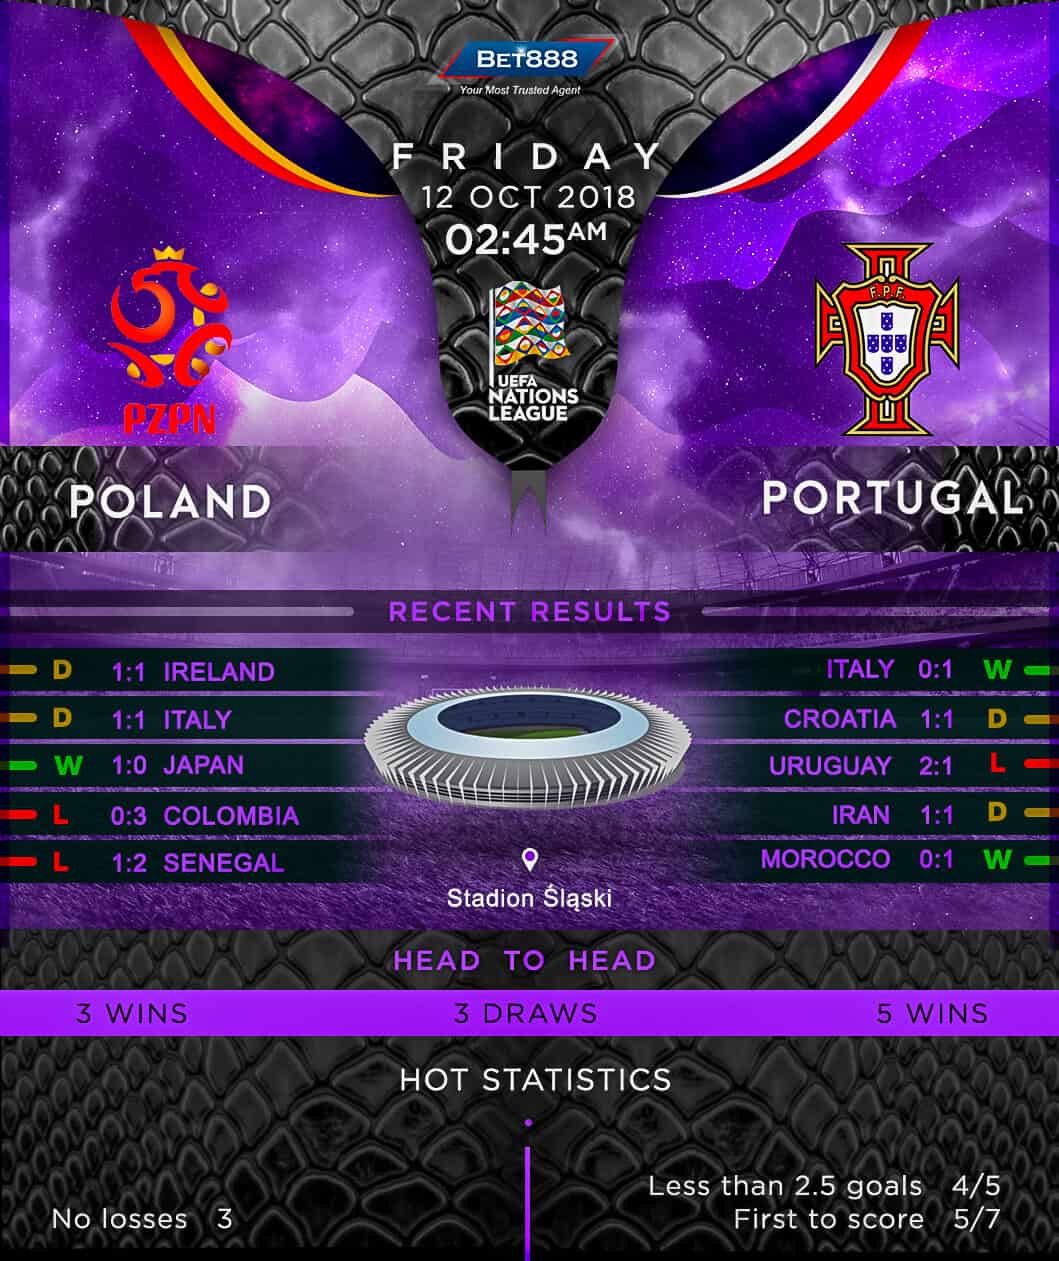 Poland vs Portugal 12/10/18